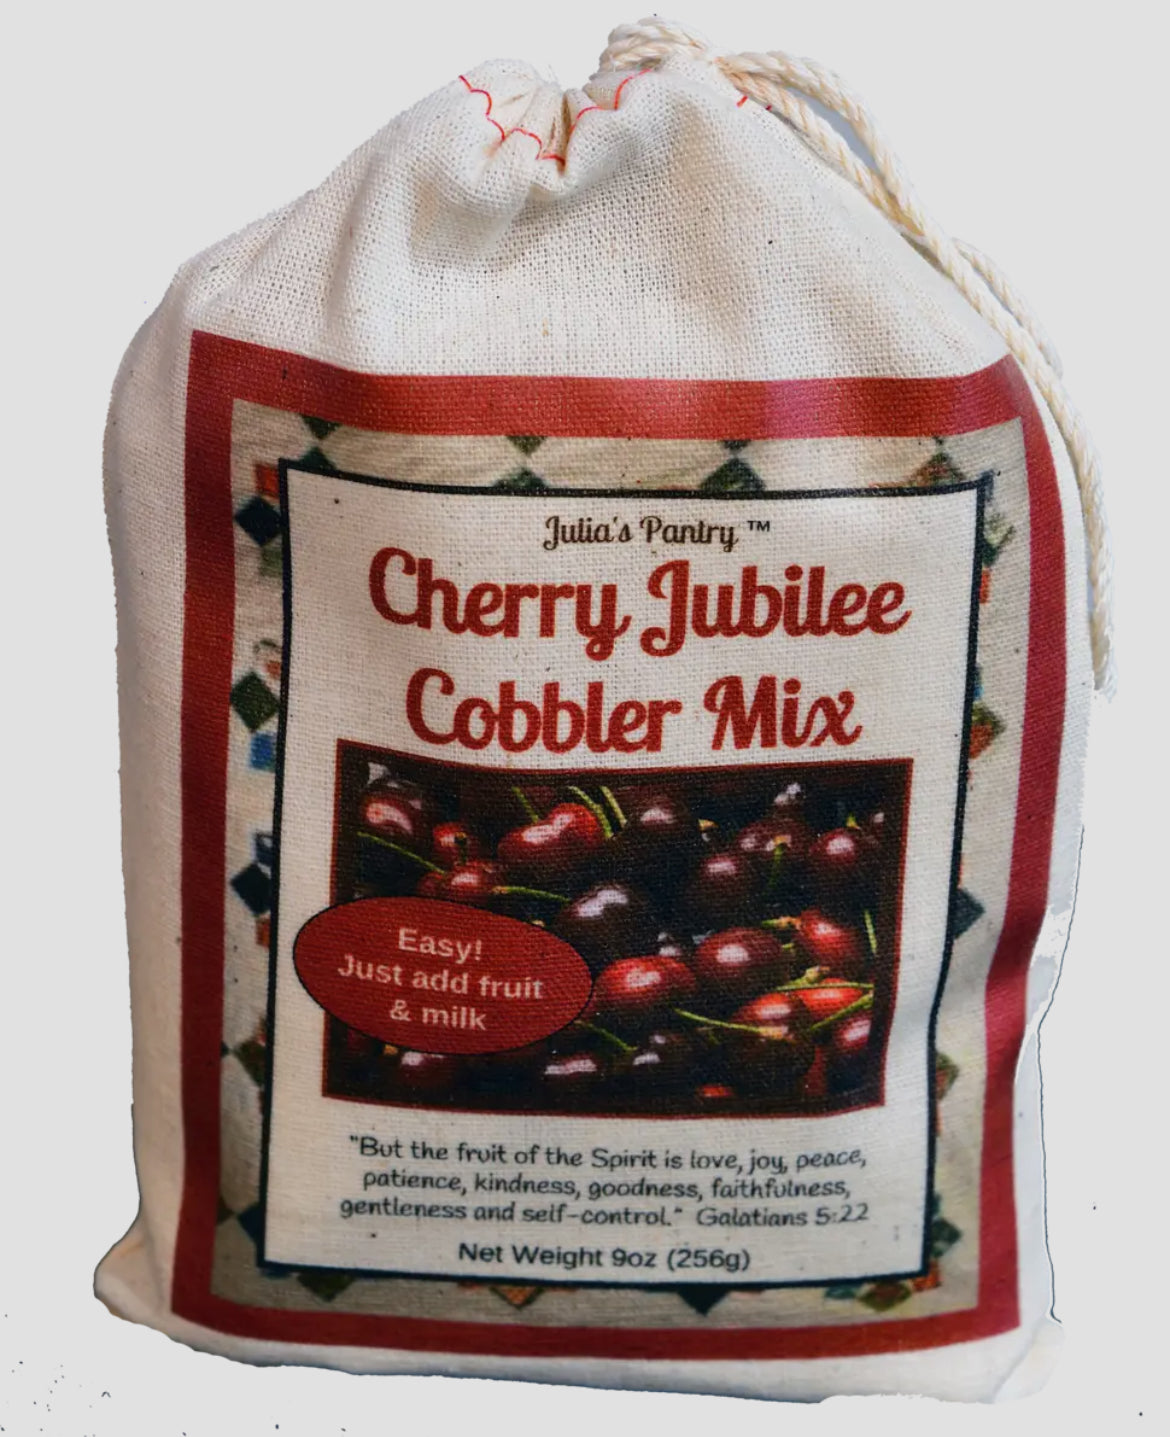 Julia’s Pantry cobbler mix